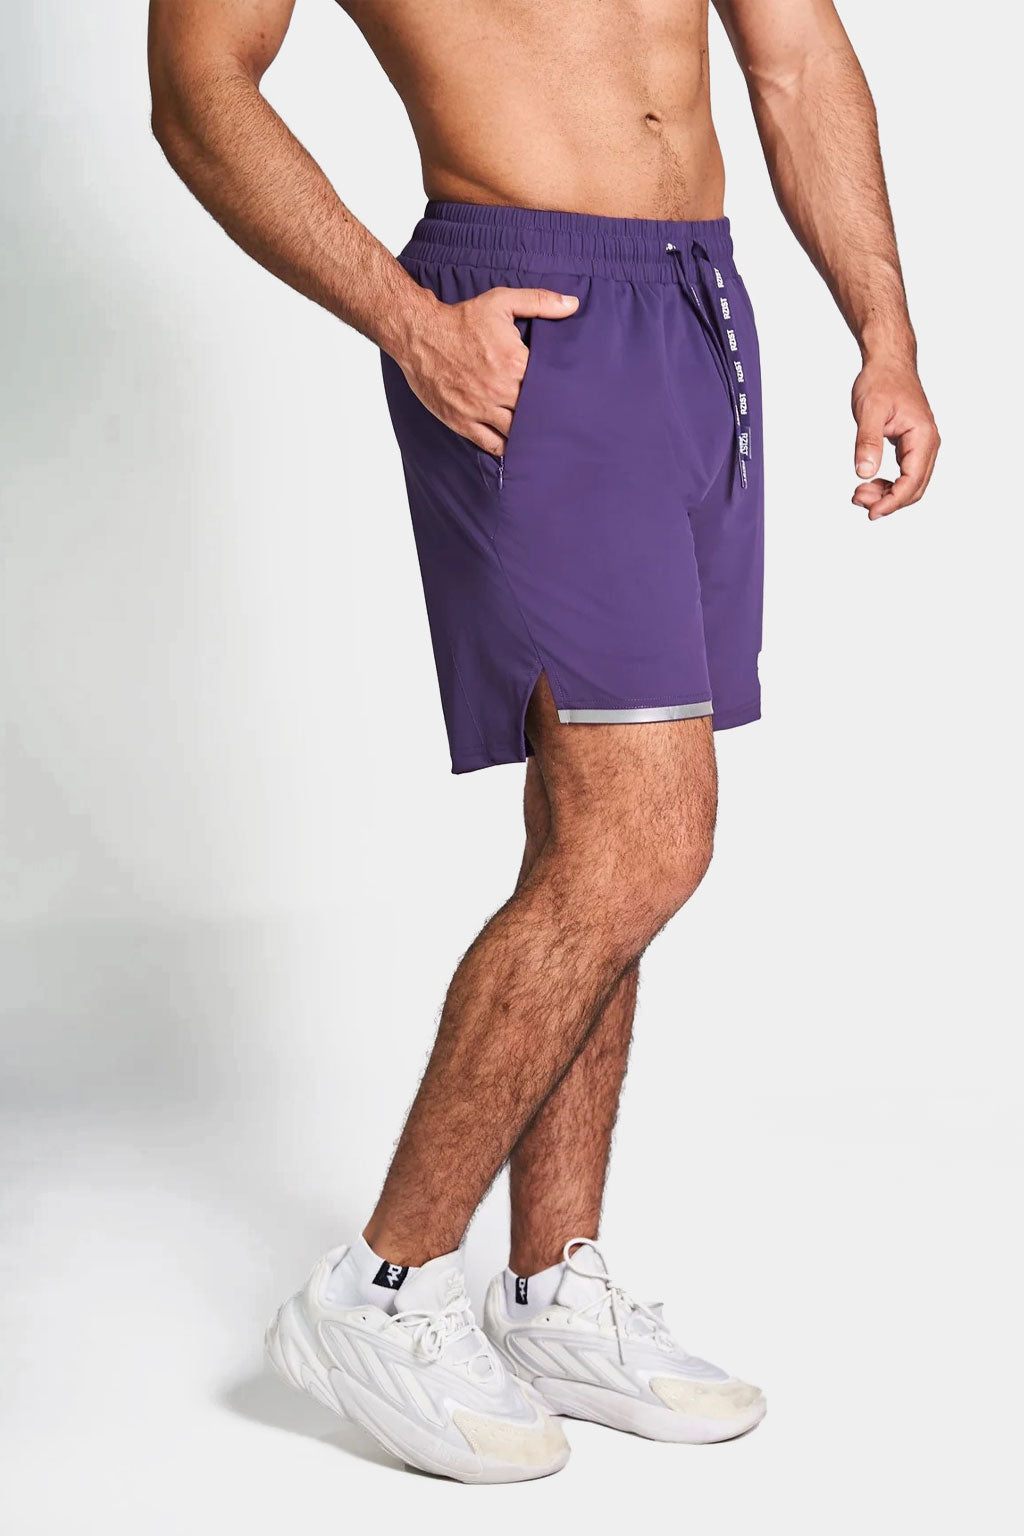 Rzist - Never Settle Men's Performance Shorts